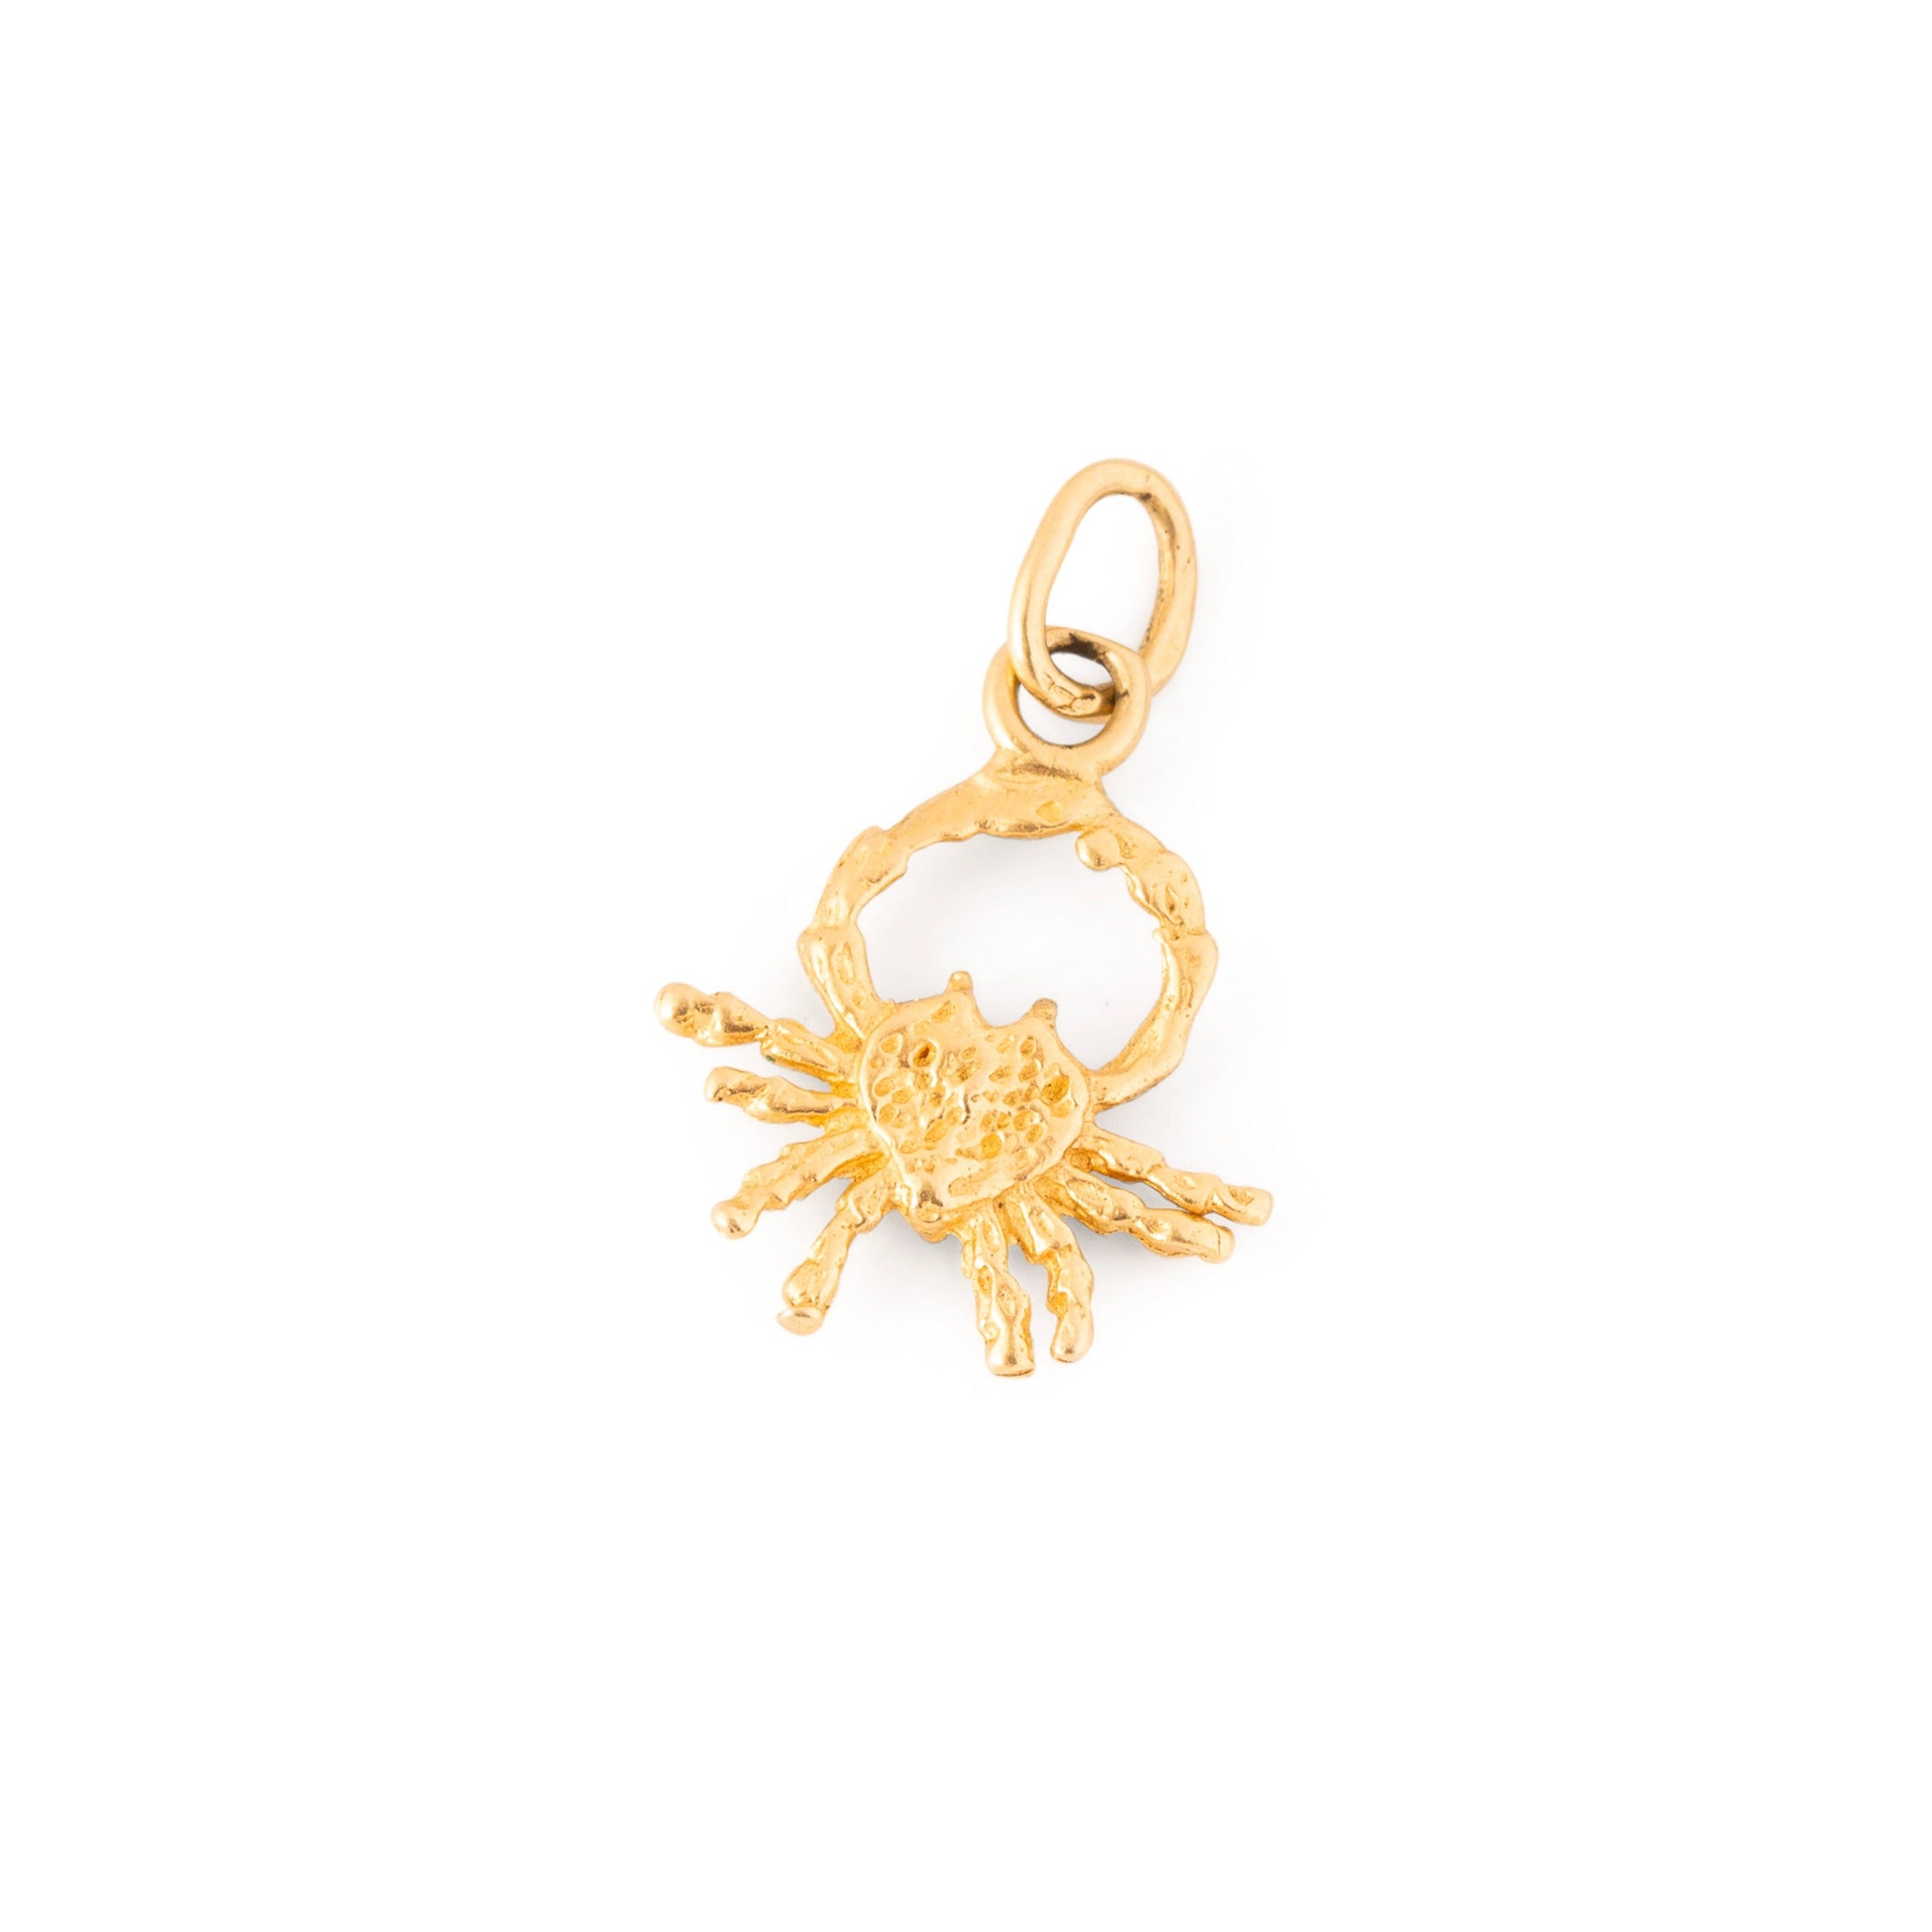 Crab Cancer Textured 14k Gold Zodiac Charm